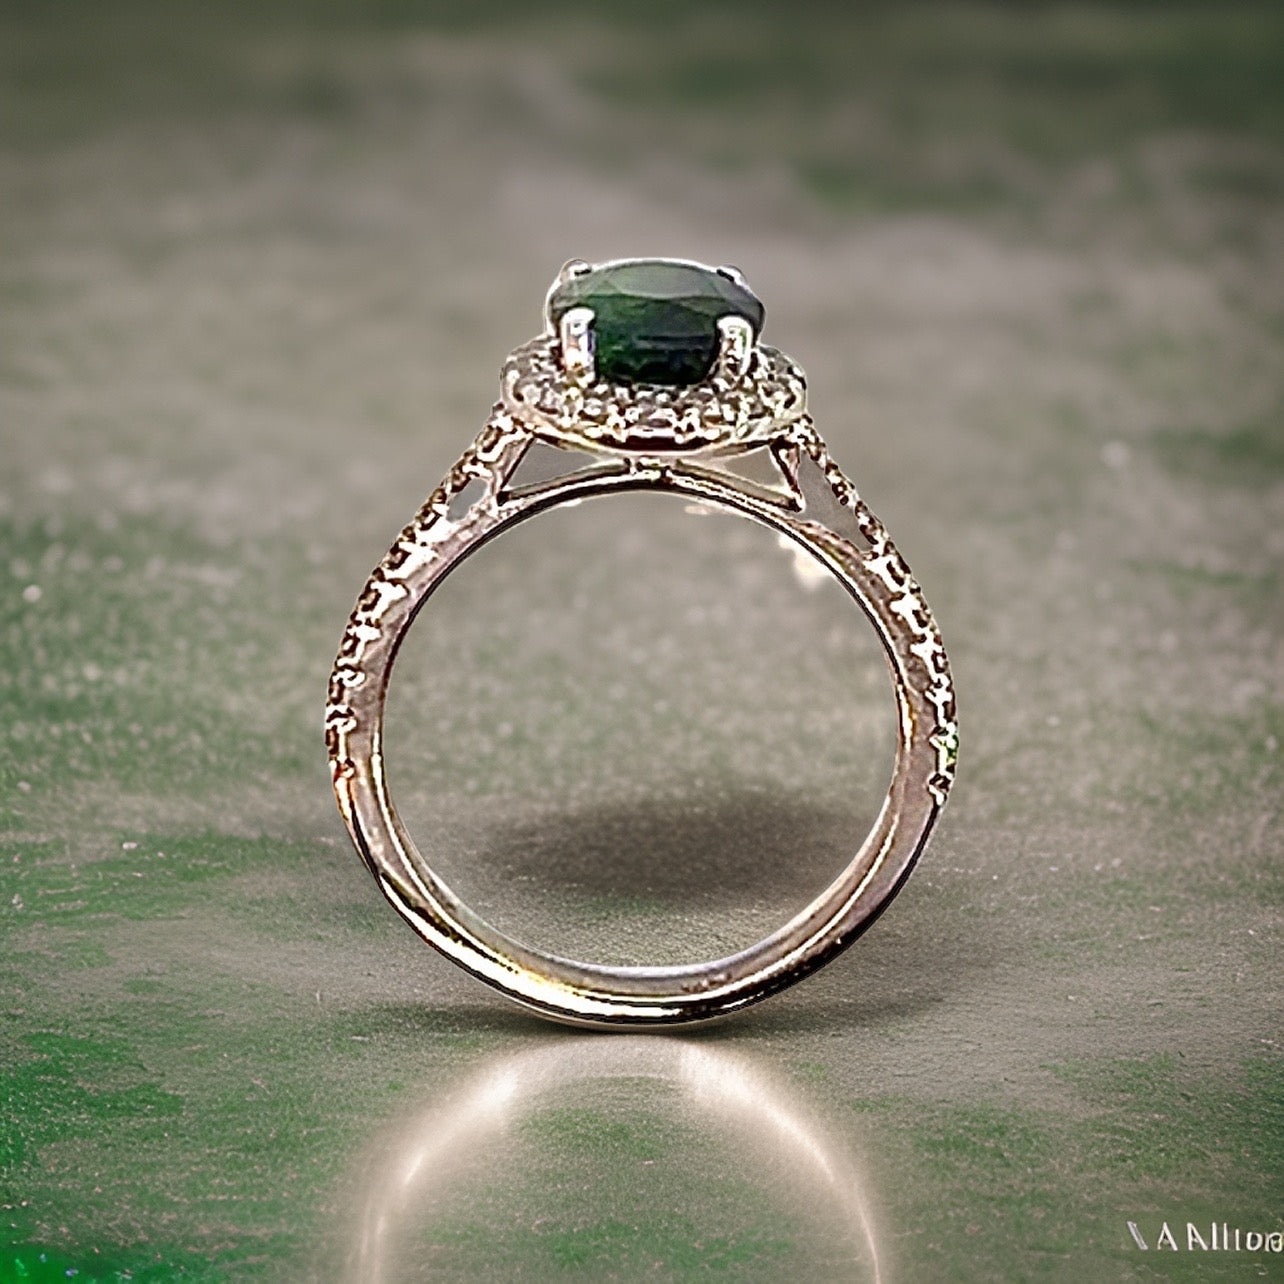 Natural Emerald Diamond Ring 6.5 14k White Gold 9.31 TCW Certified $2,950 310616